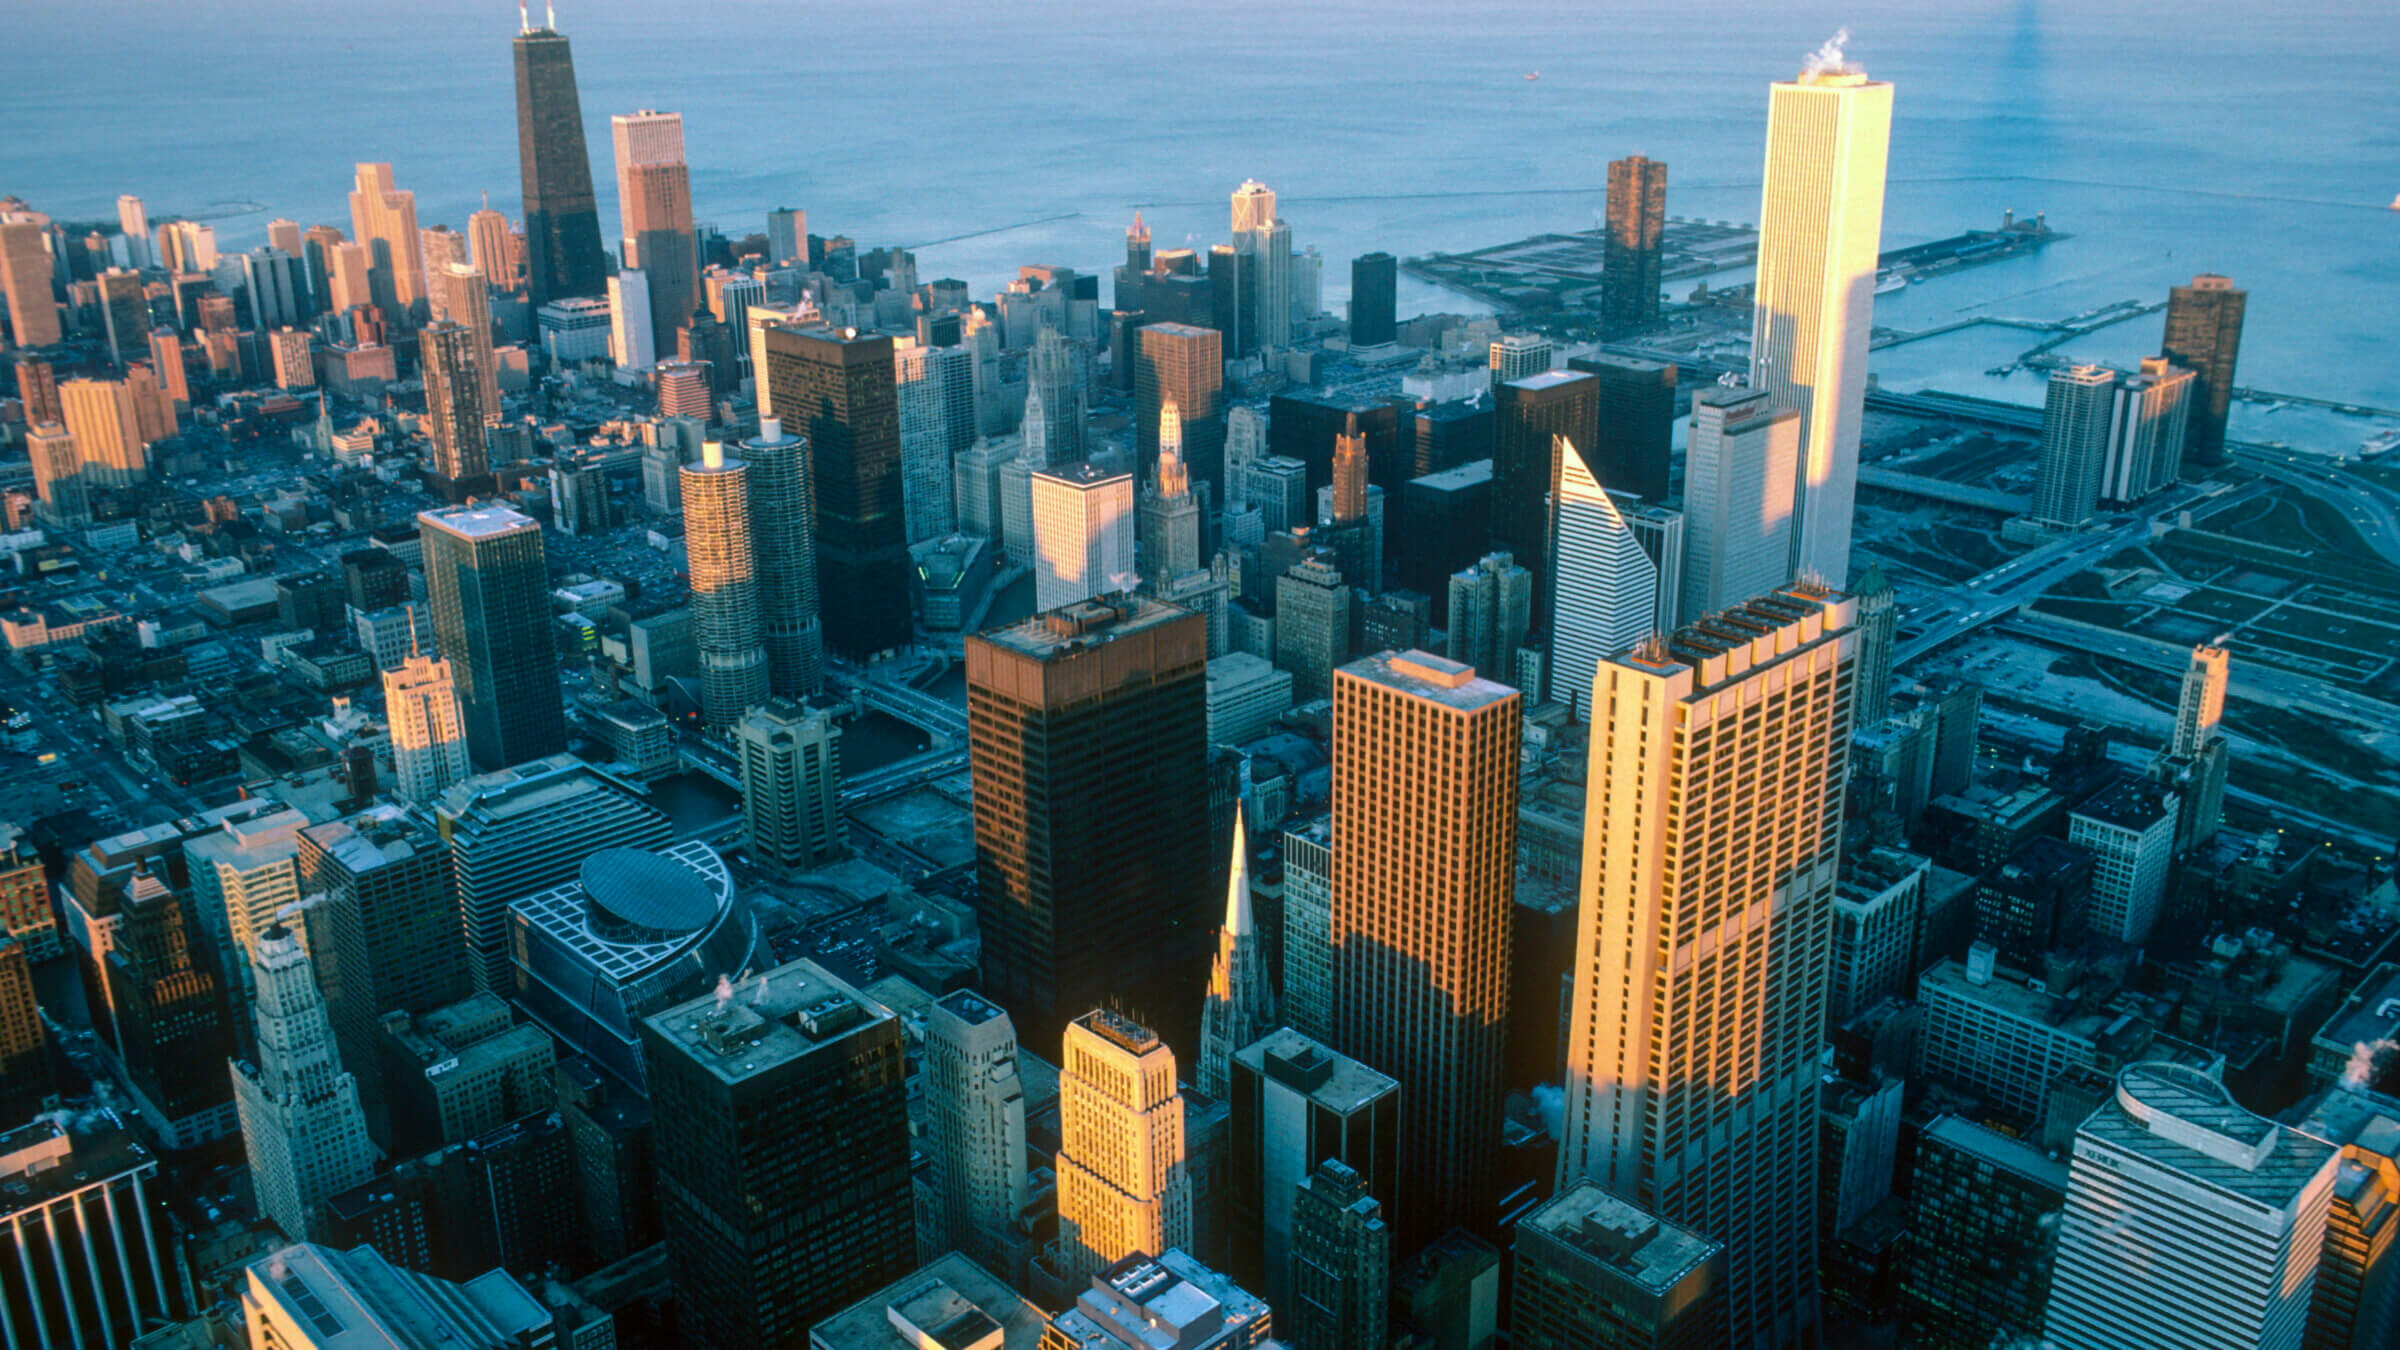 Skyline of Chicago, Illinois